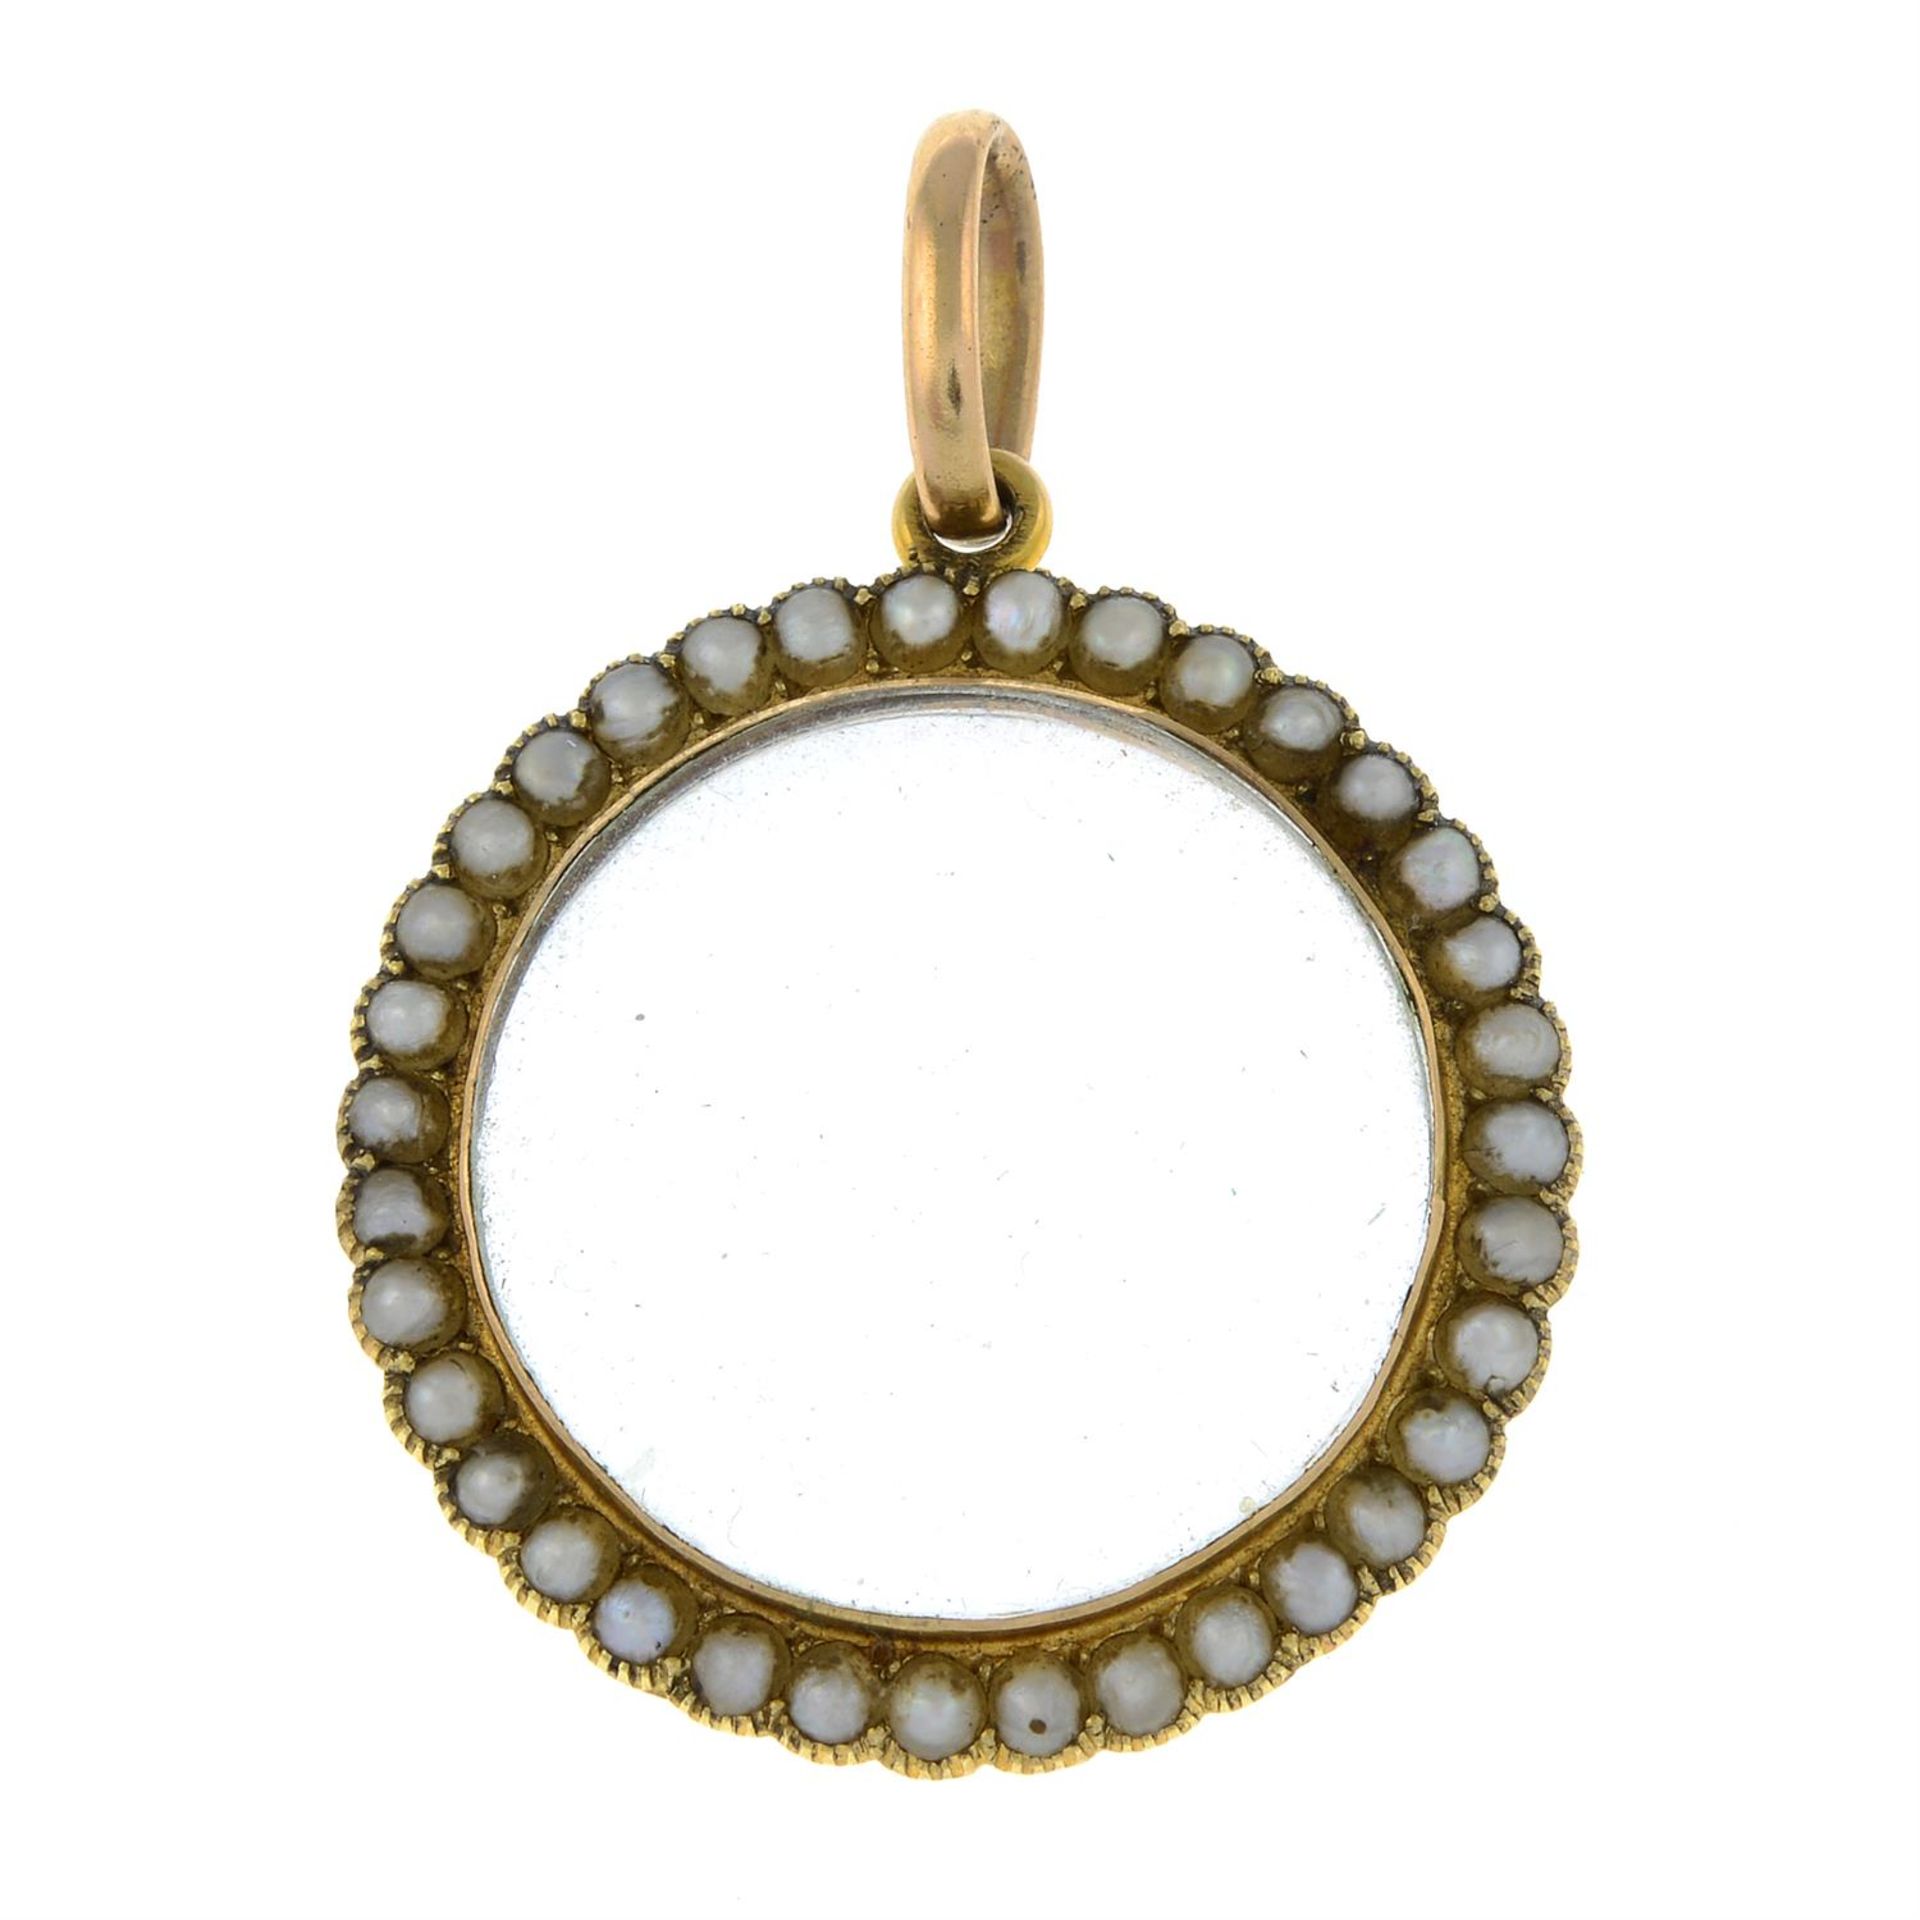 An Edwardian 15ct gold split pearl locket pendant.